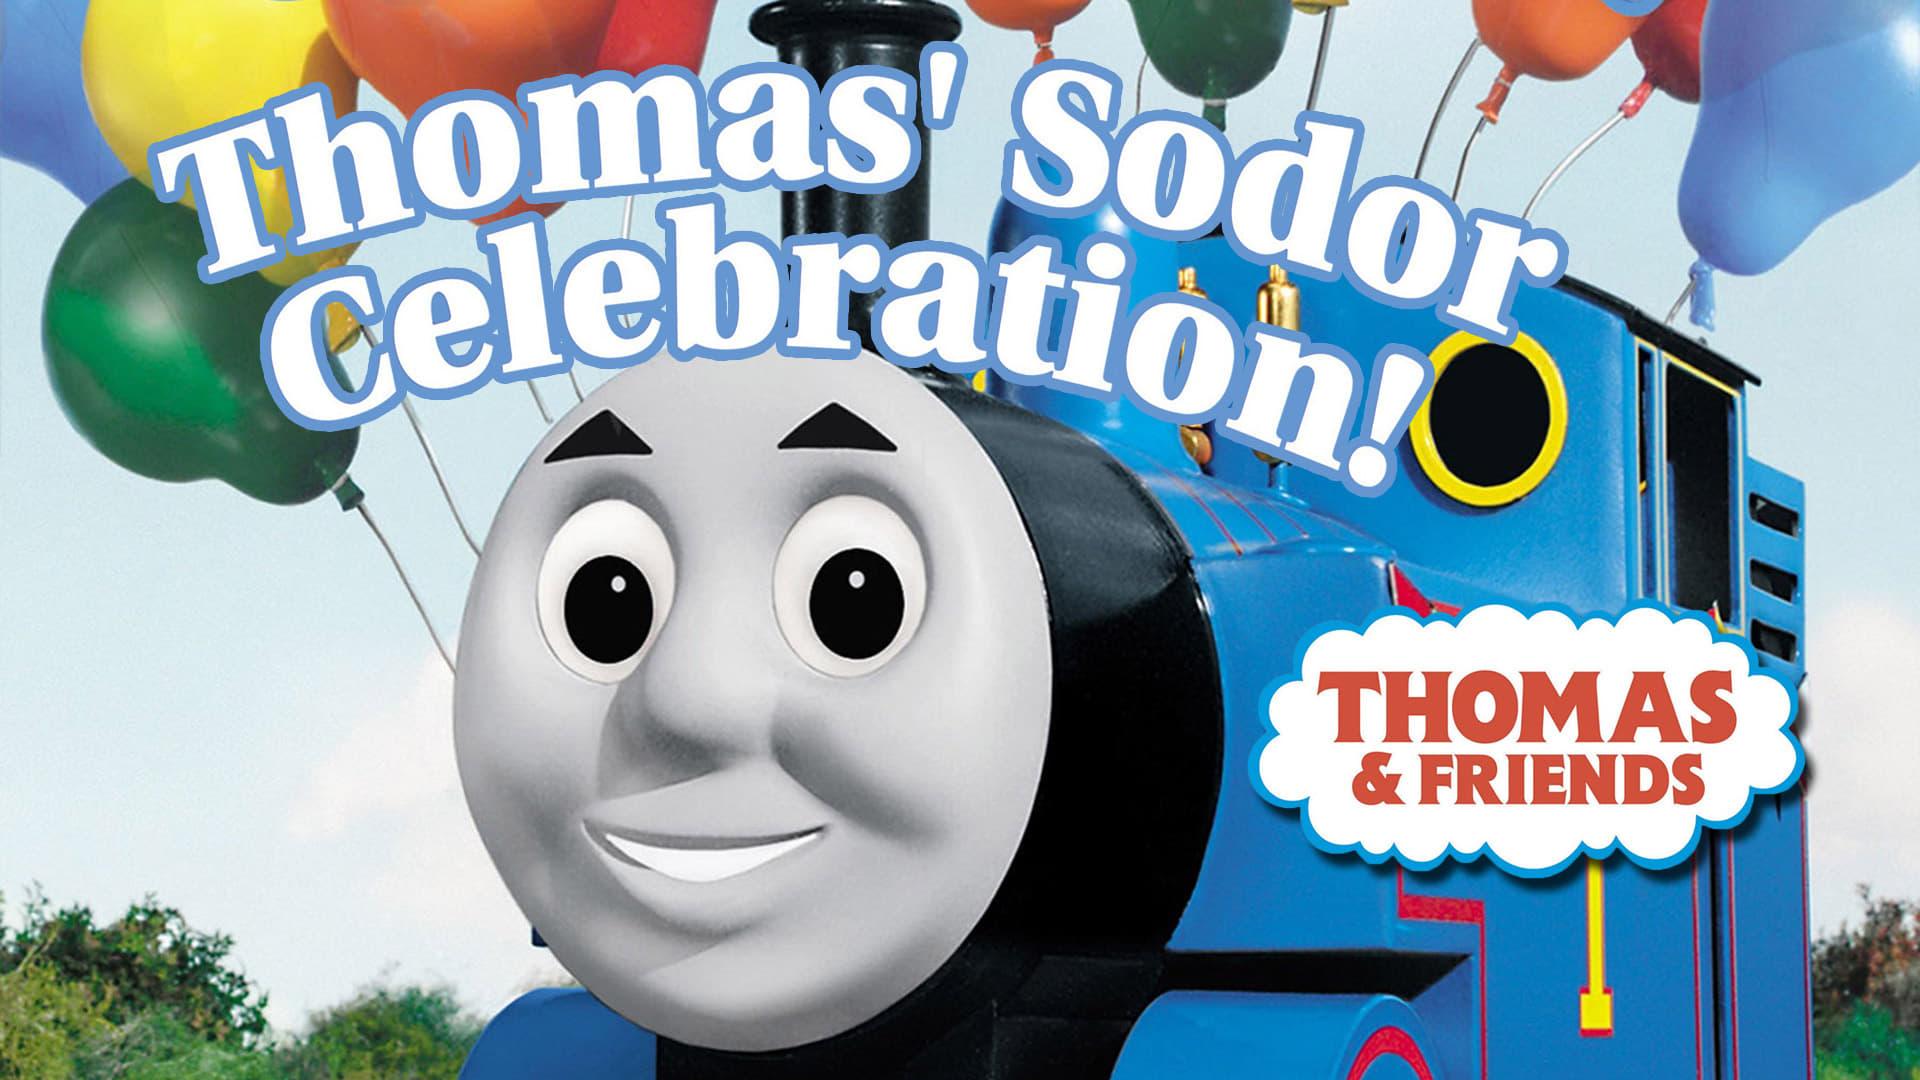 Thomas & Friends: Thomas' Sodor Celebration! backdrop